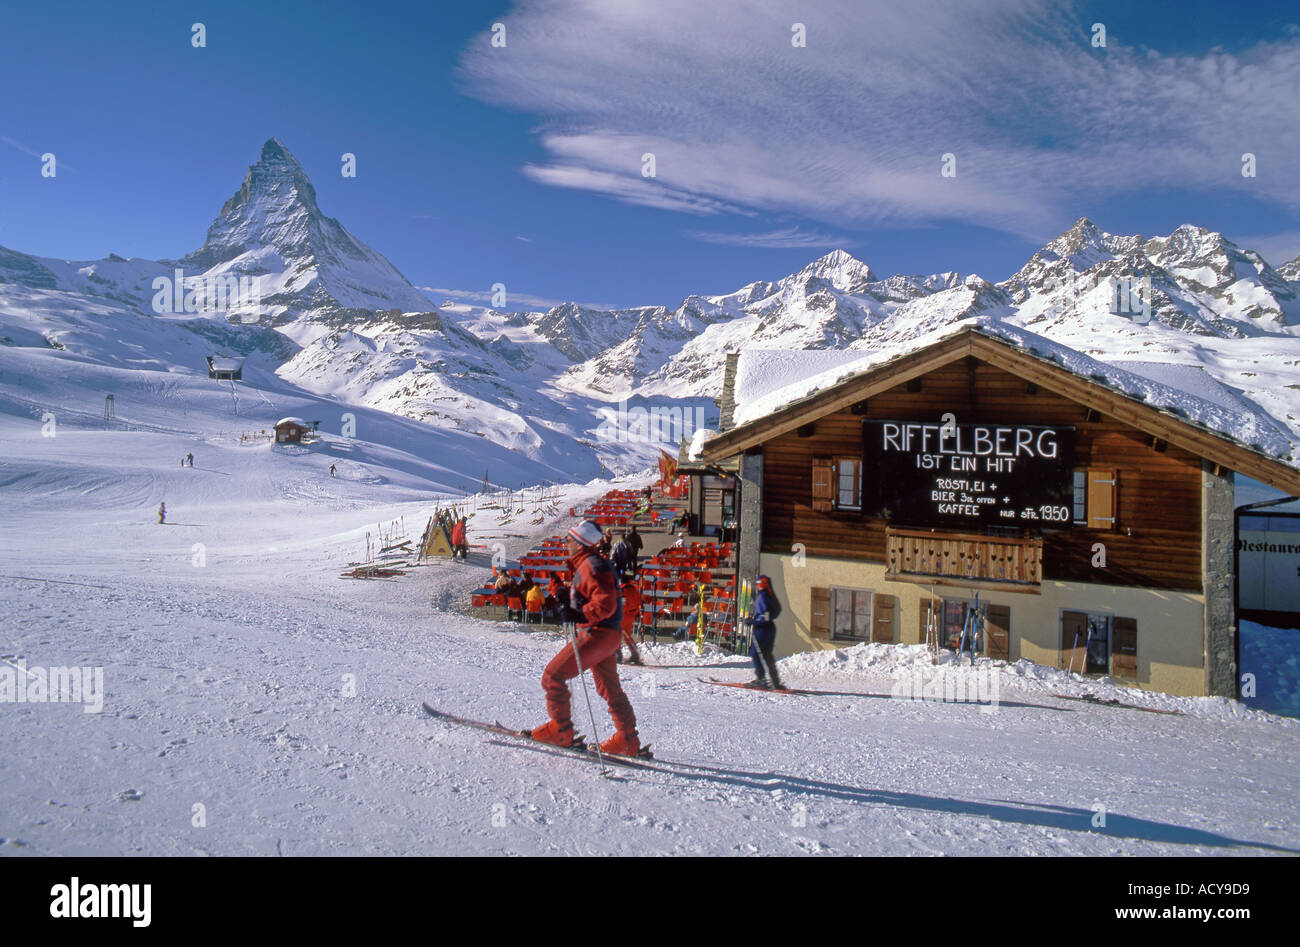 Switzerland Wallis Zermatt swiss alps Mount Matterhorn Riffelberg Gorner glacier skier Stock Photo